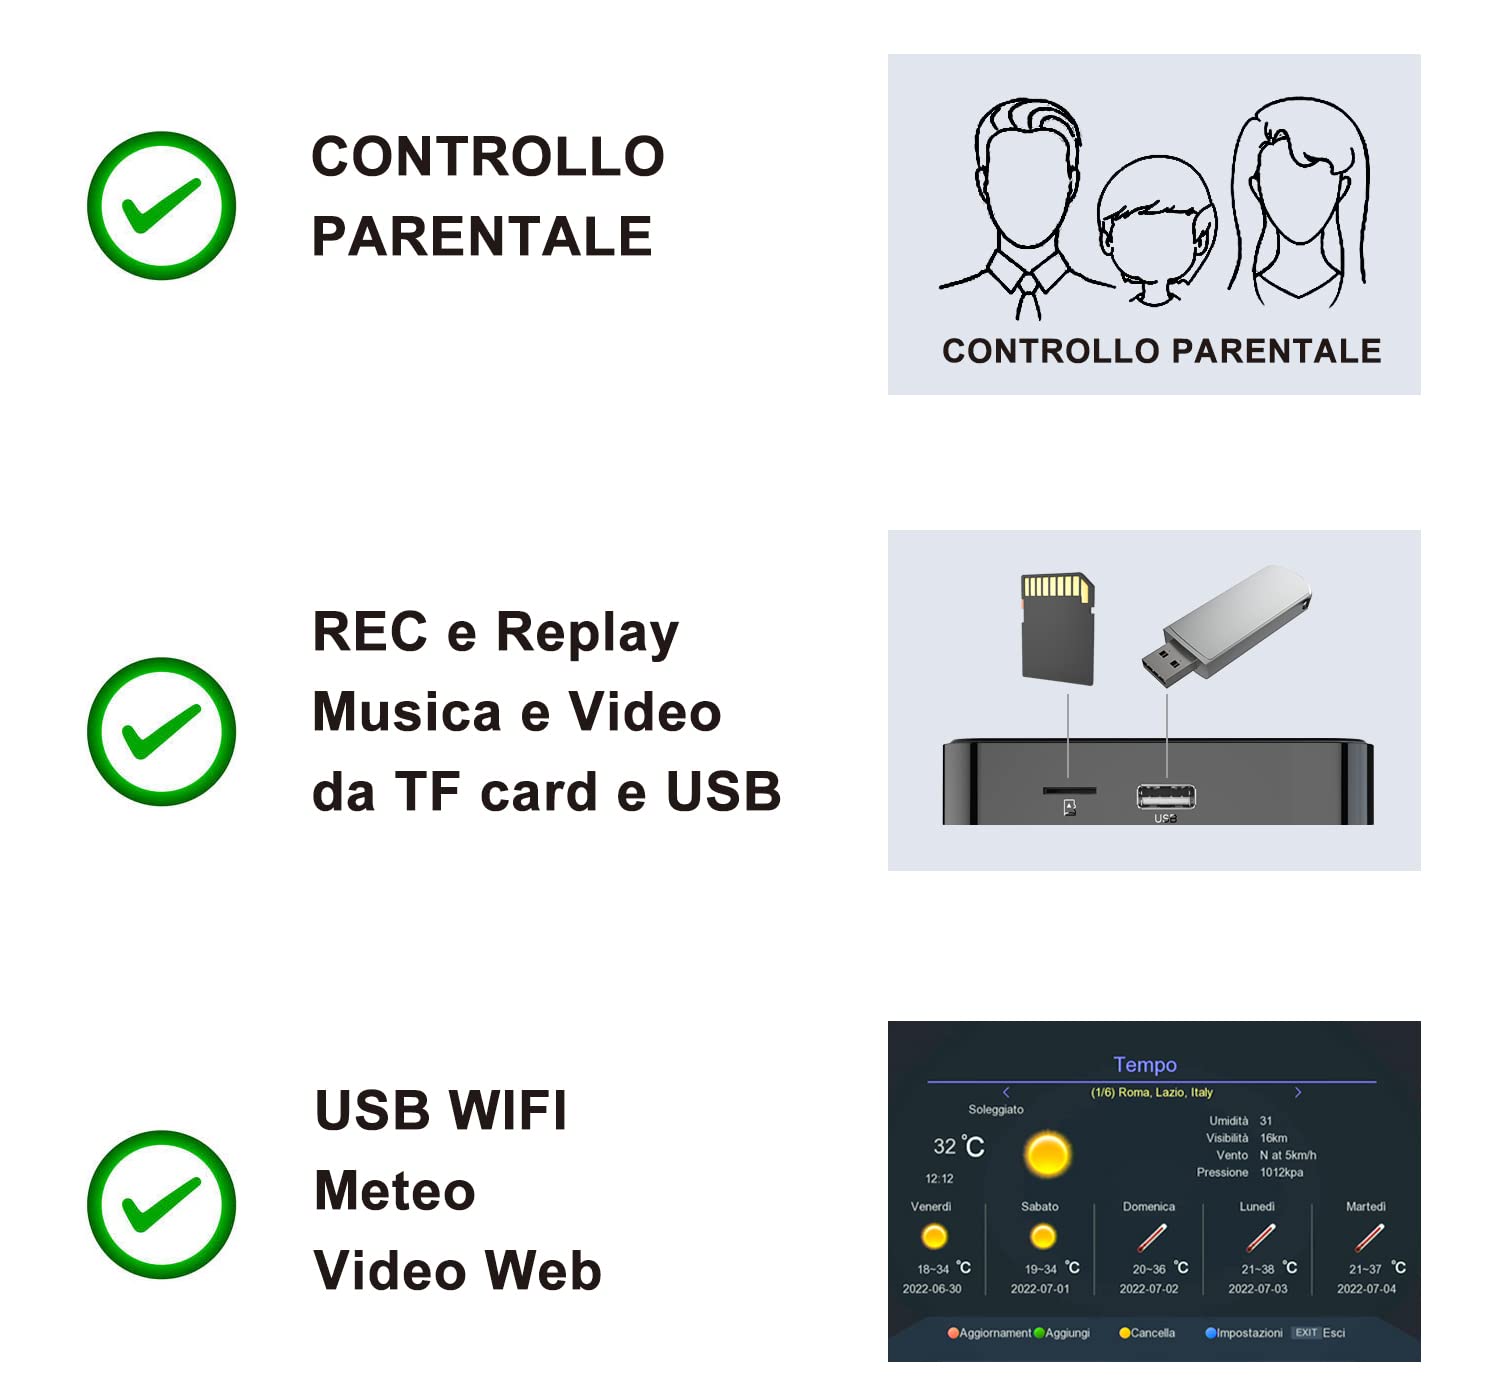 REC e Replay Musica e Video da TF card e USB